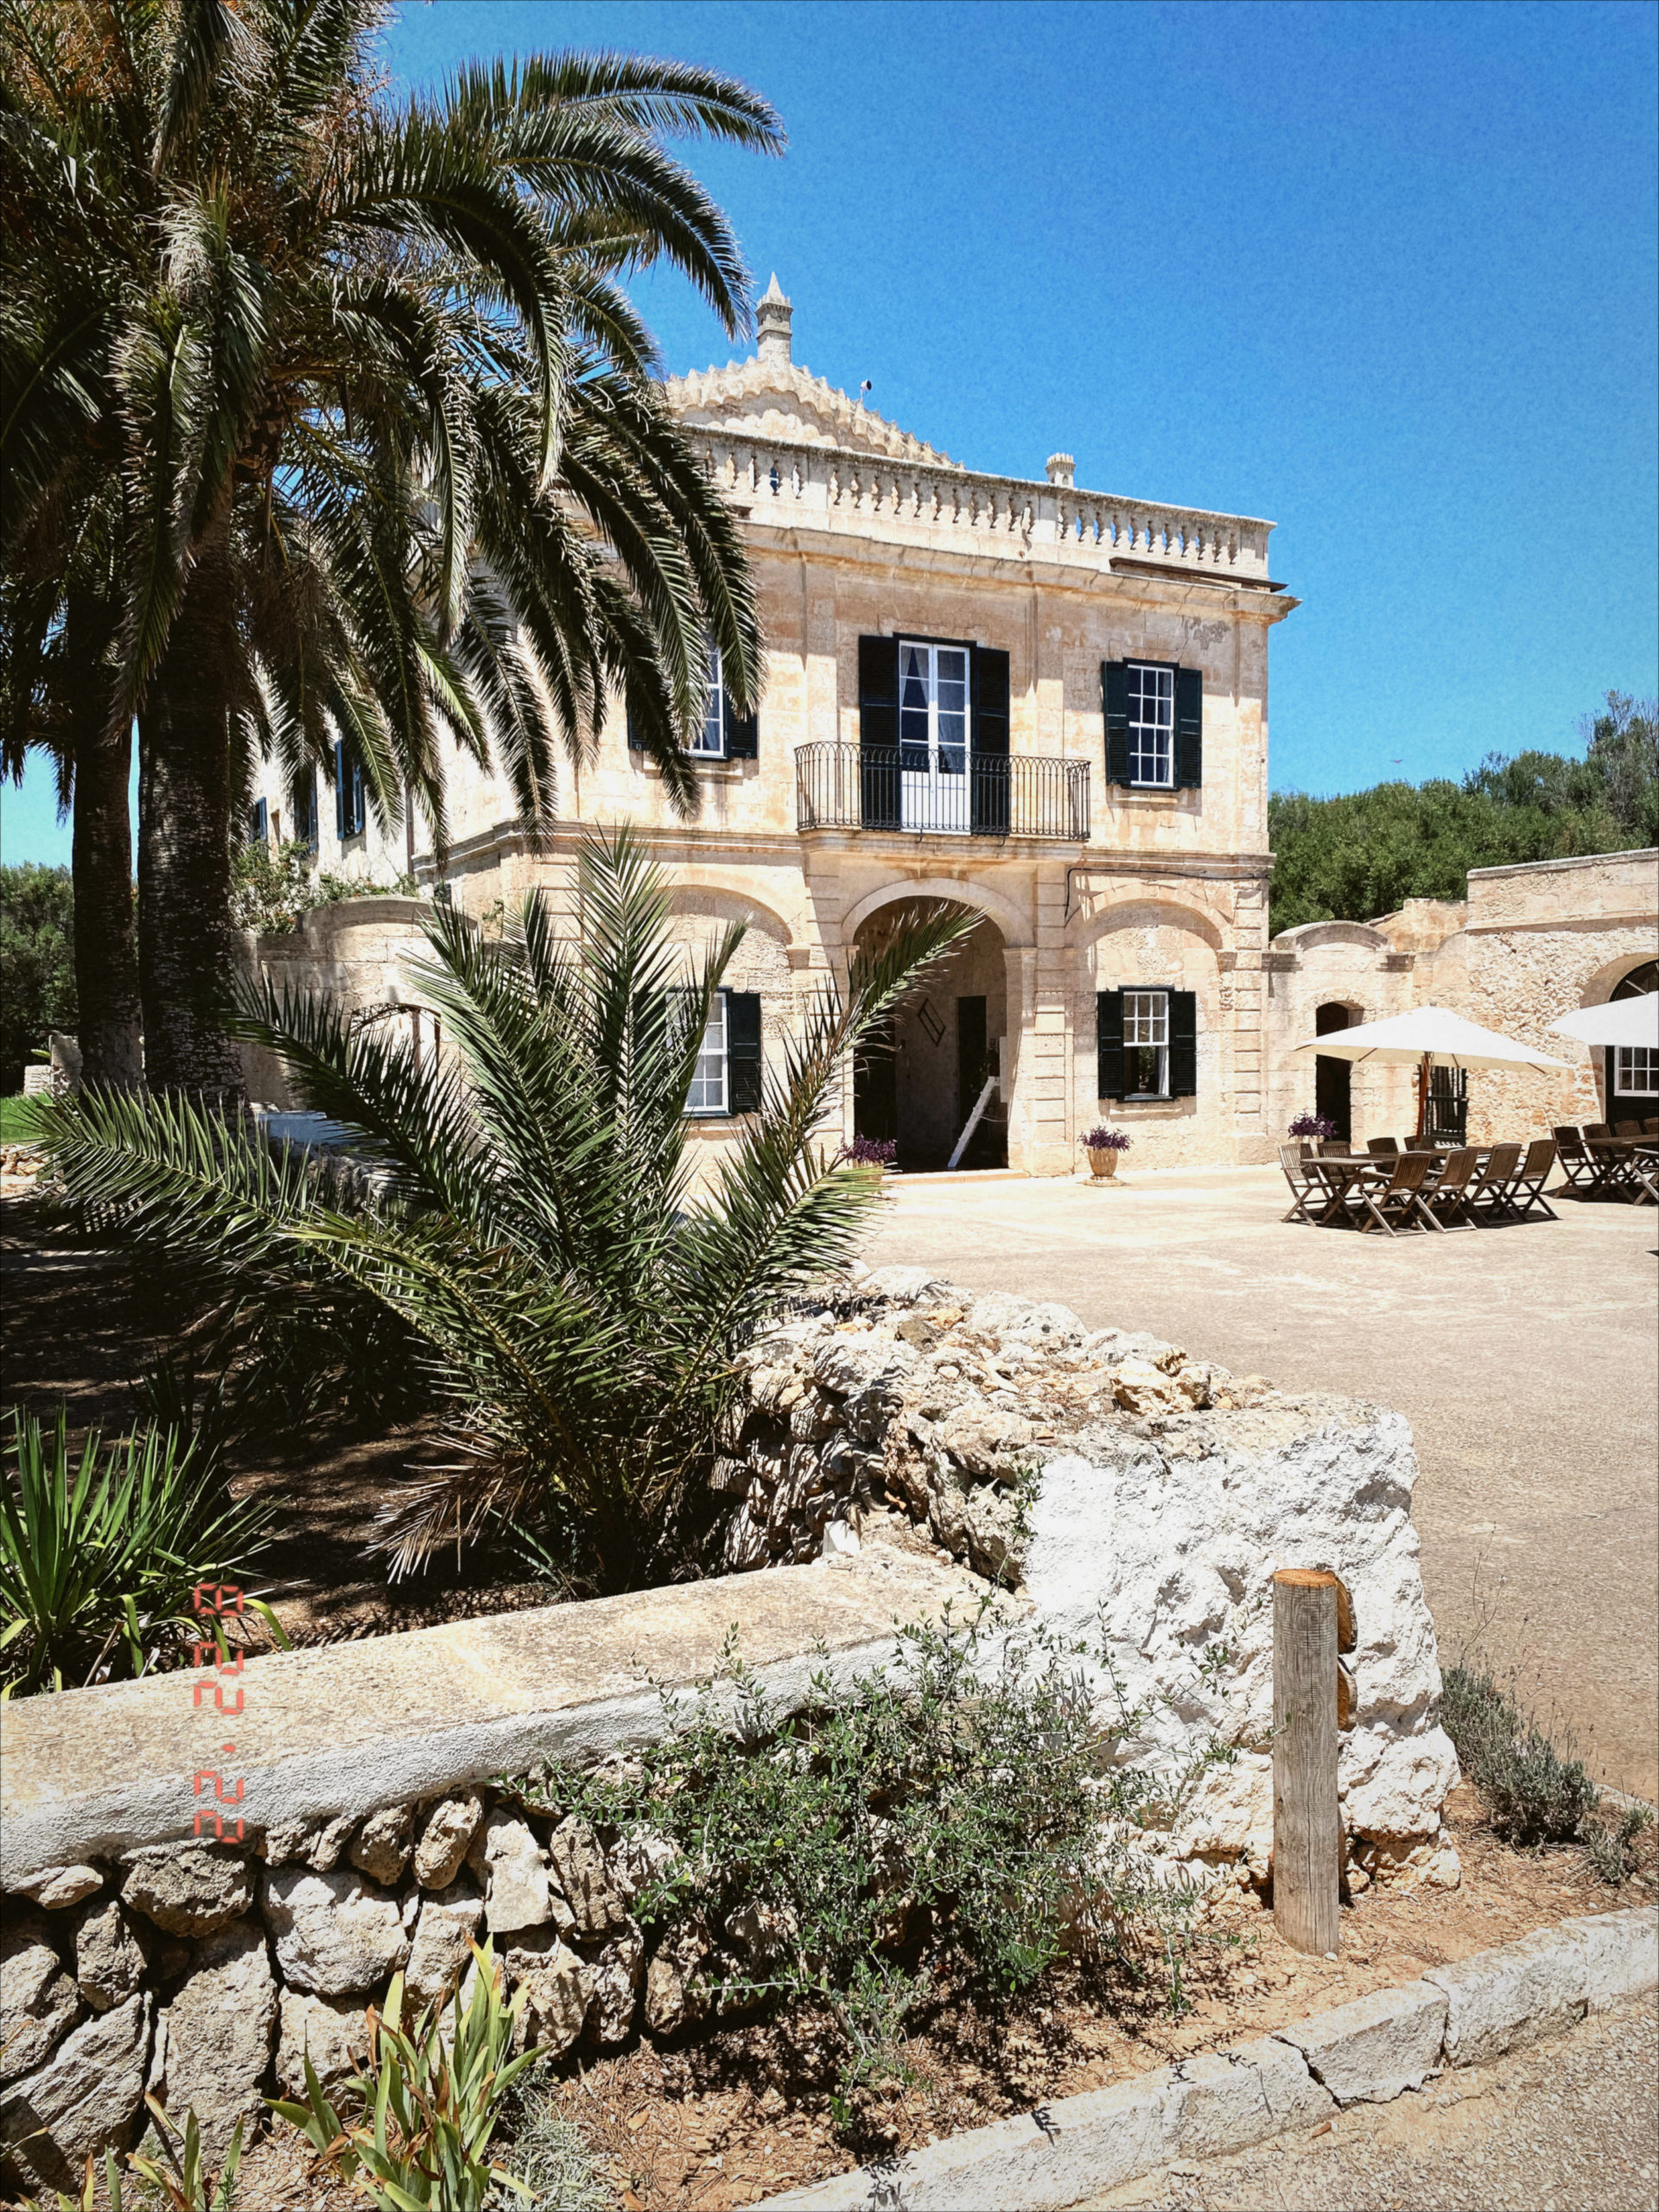 Alcaufar Vell Menorca | Menorca Travel Tips | Monica Beatrice Blog